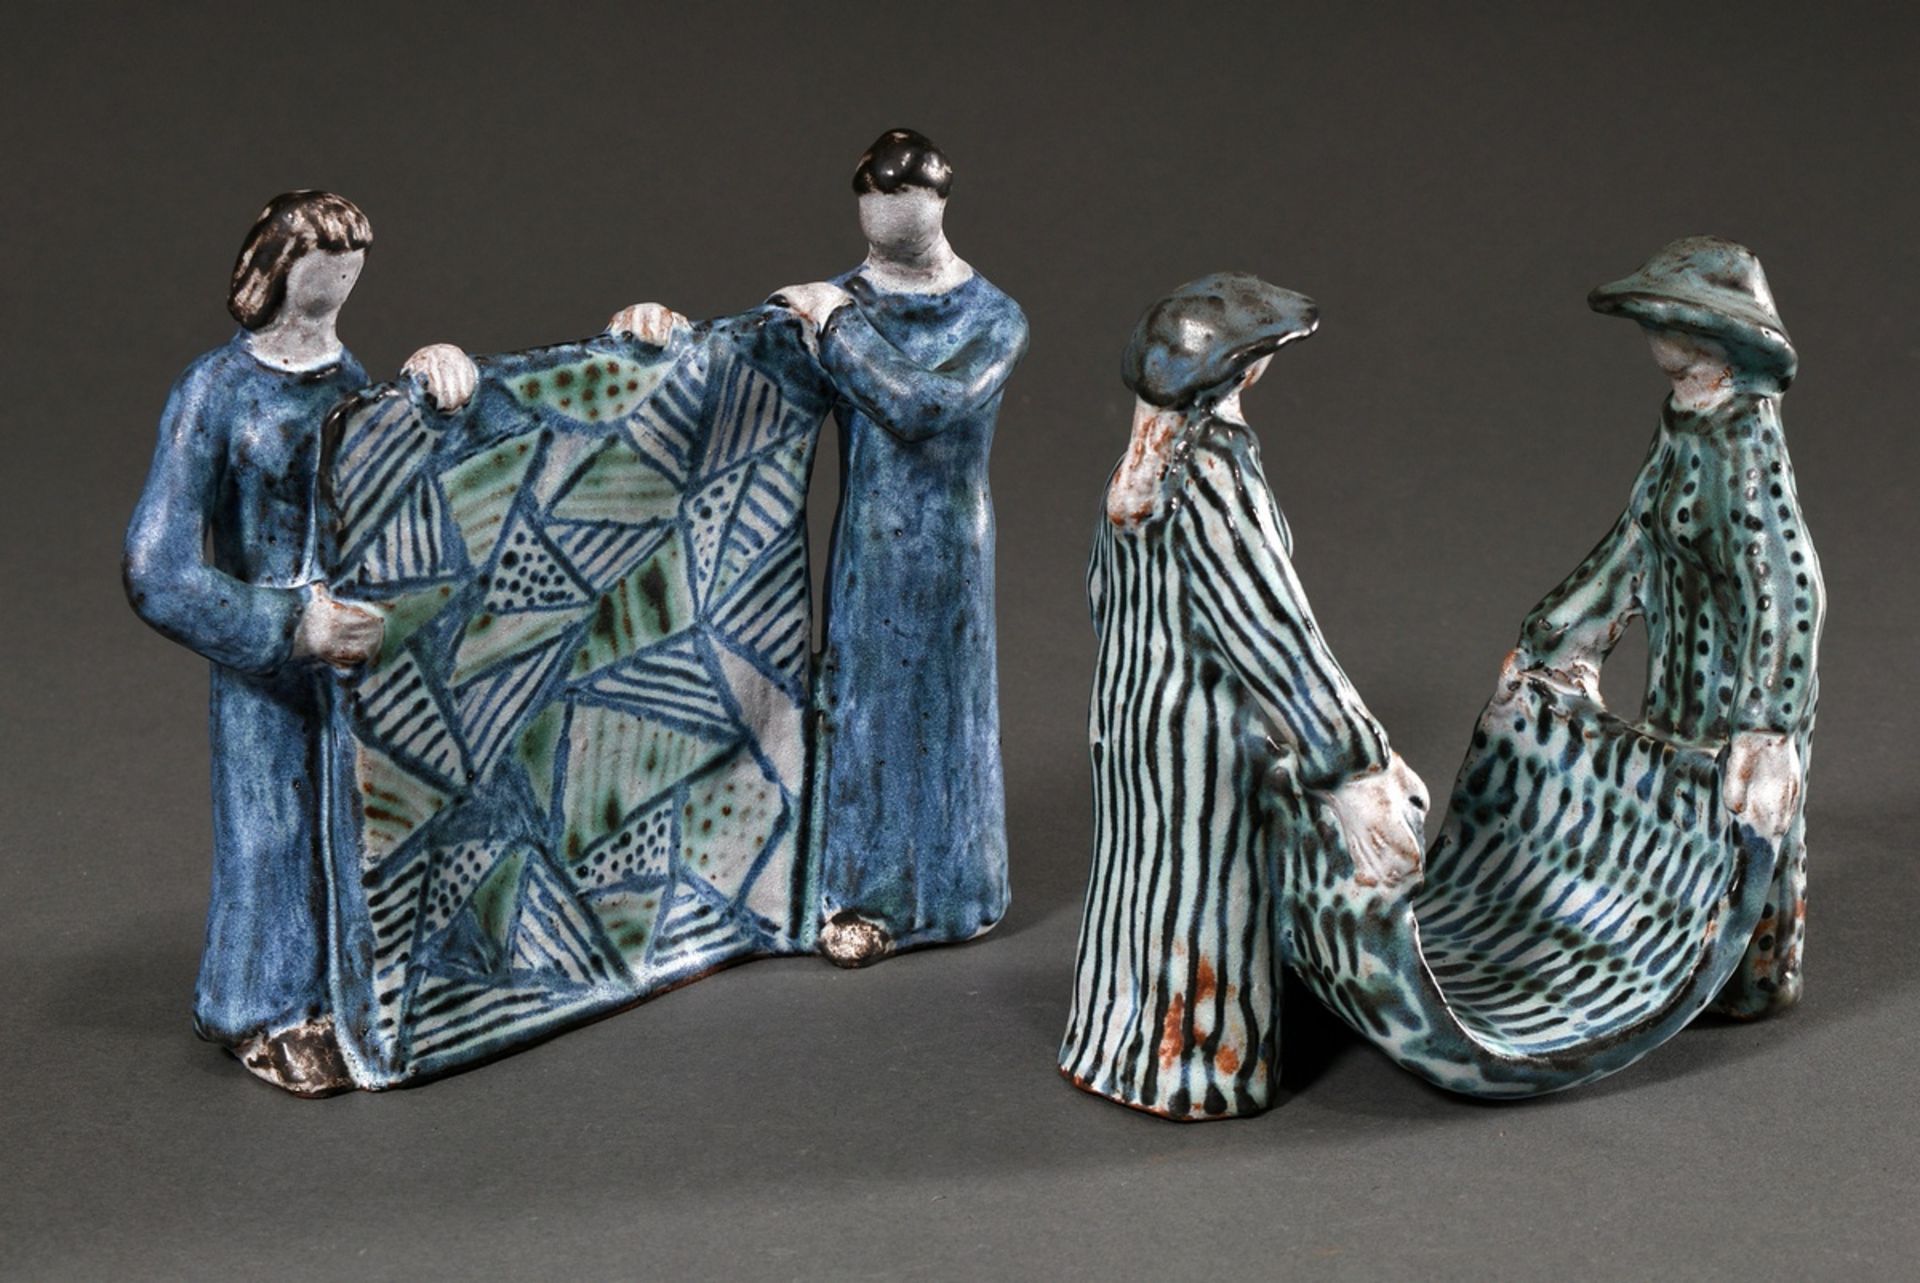 2 Diverse Maetzel, Monika (1917-2010) Figurengruppen "Zwei Frauen mit buntem Tuch", Keramik weiß/bl